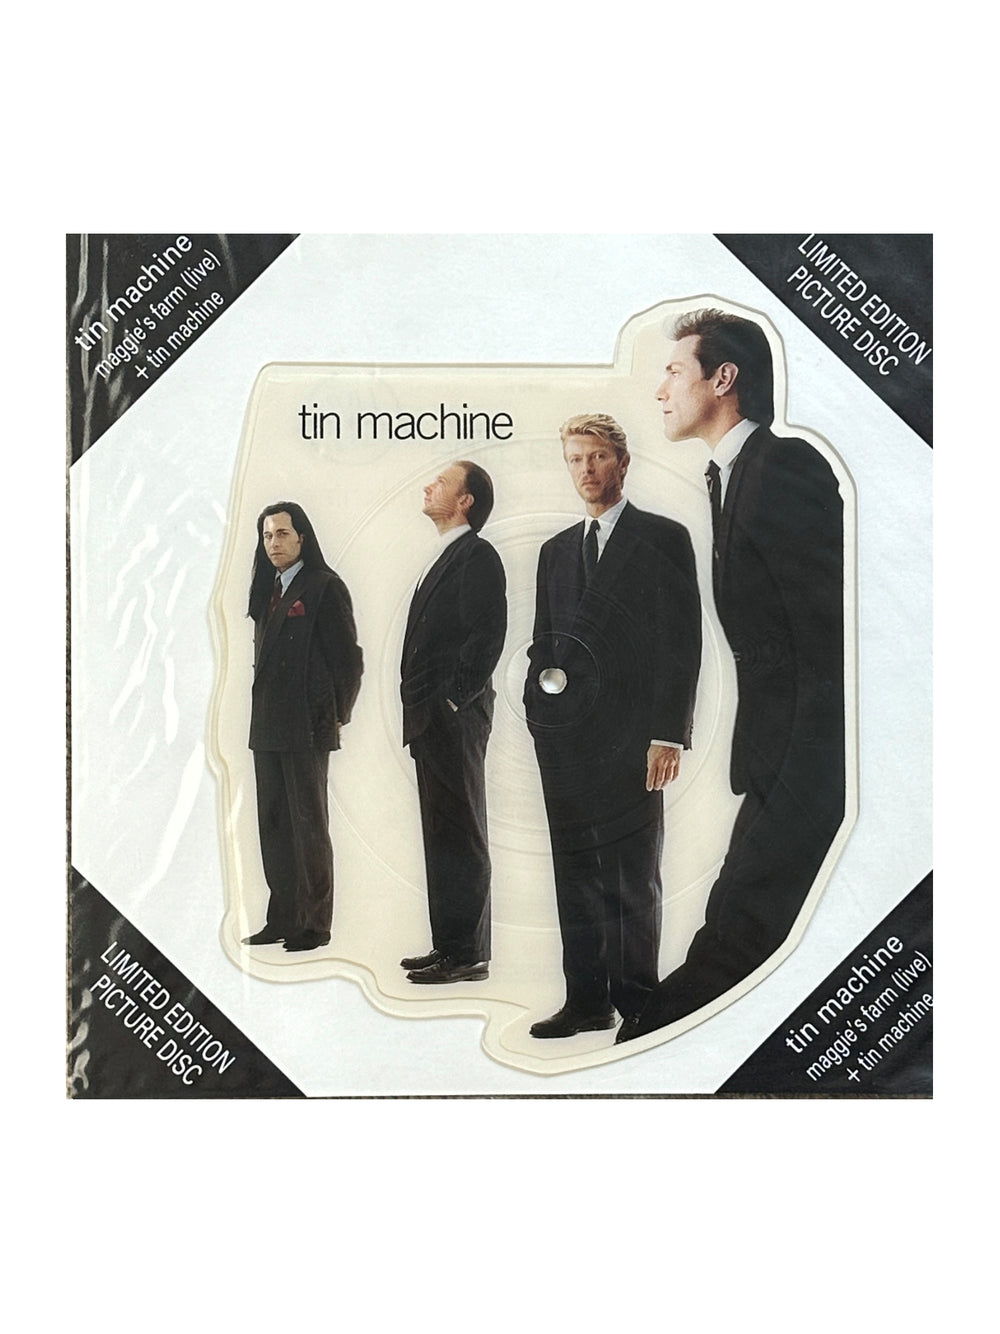 David Bowie - Tin Machine Maggie's Farm Live 7" Vinyl UK Picture Disc Preloved:1989